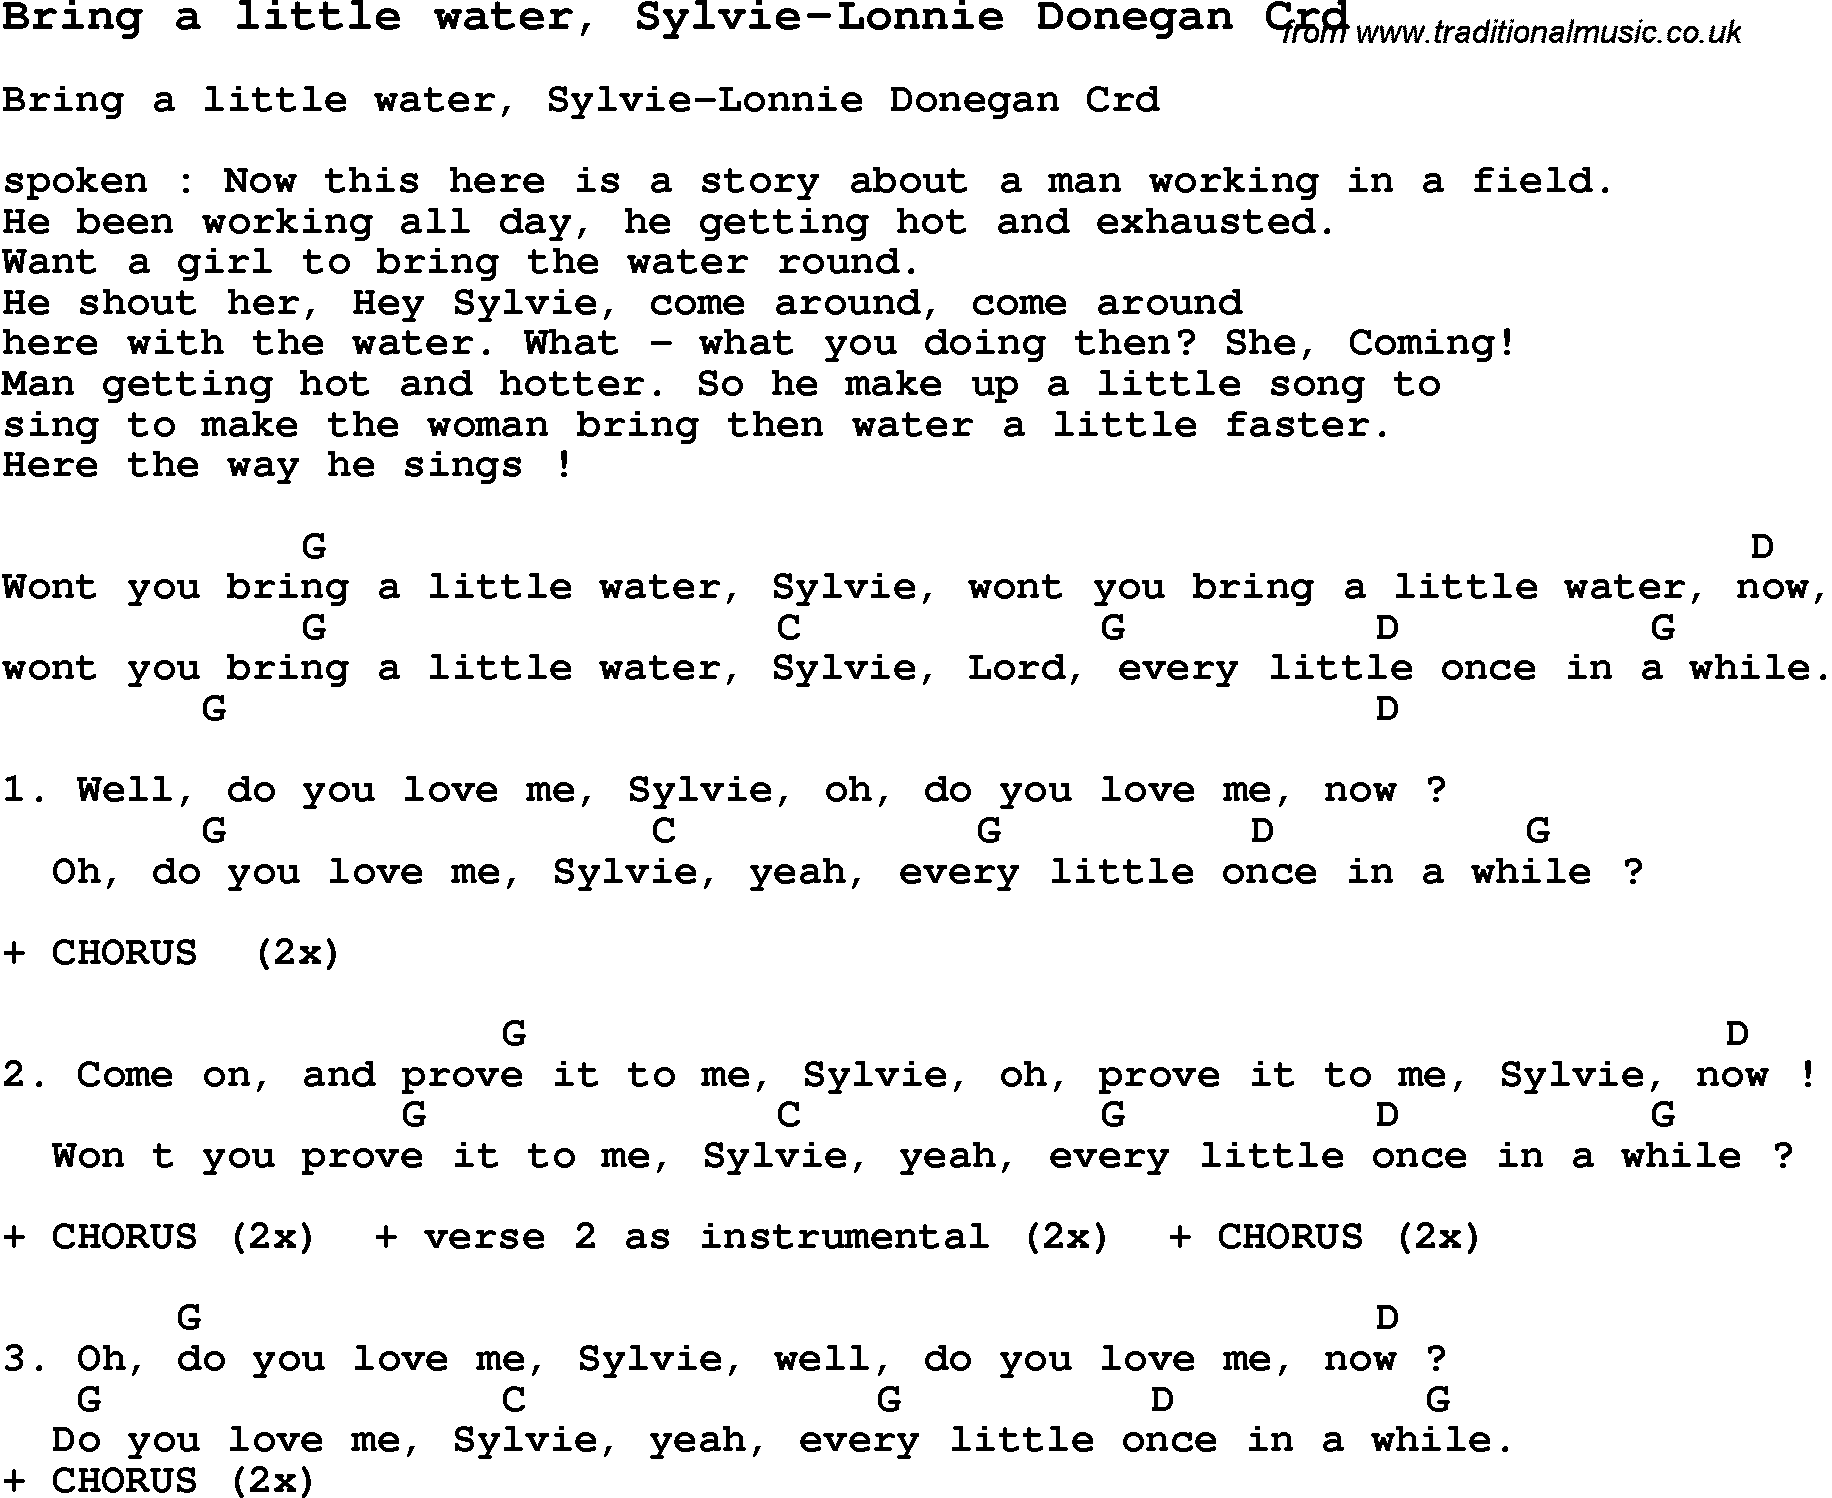 Skiffle Song Lyrics for Bring A Little Water, Sylvie-Lonnie Donegan with chords for Mandolin, Ukulele, Guitar, Banjo etc.